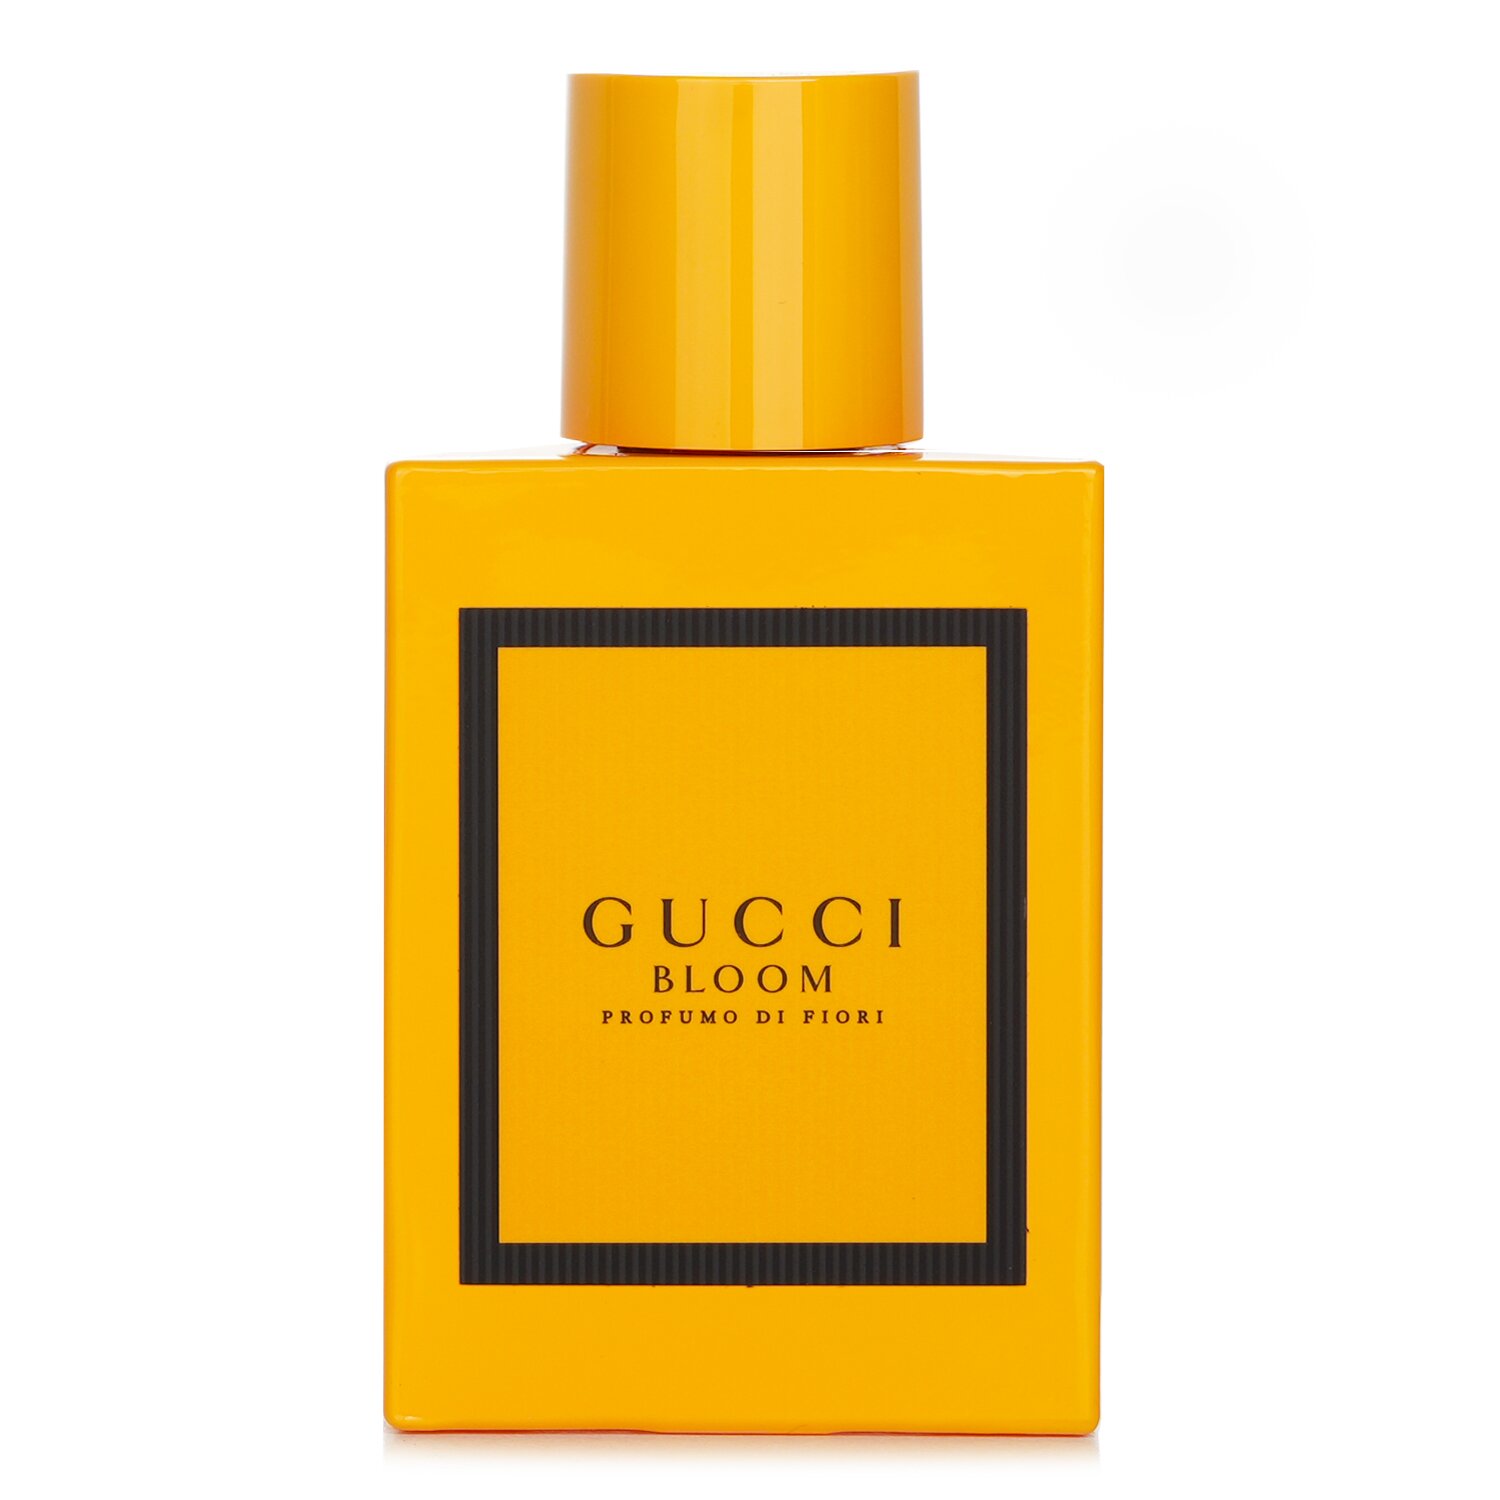 Gucci Bloom Profumo Di Fiori Eau De Parfum Spray 50ml/1.6oz